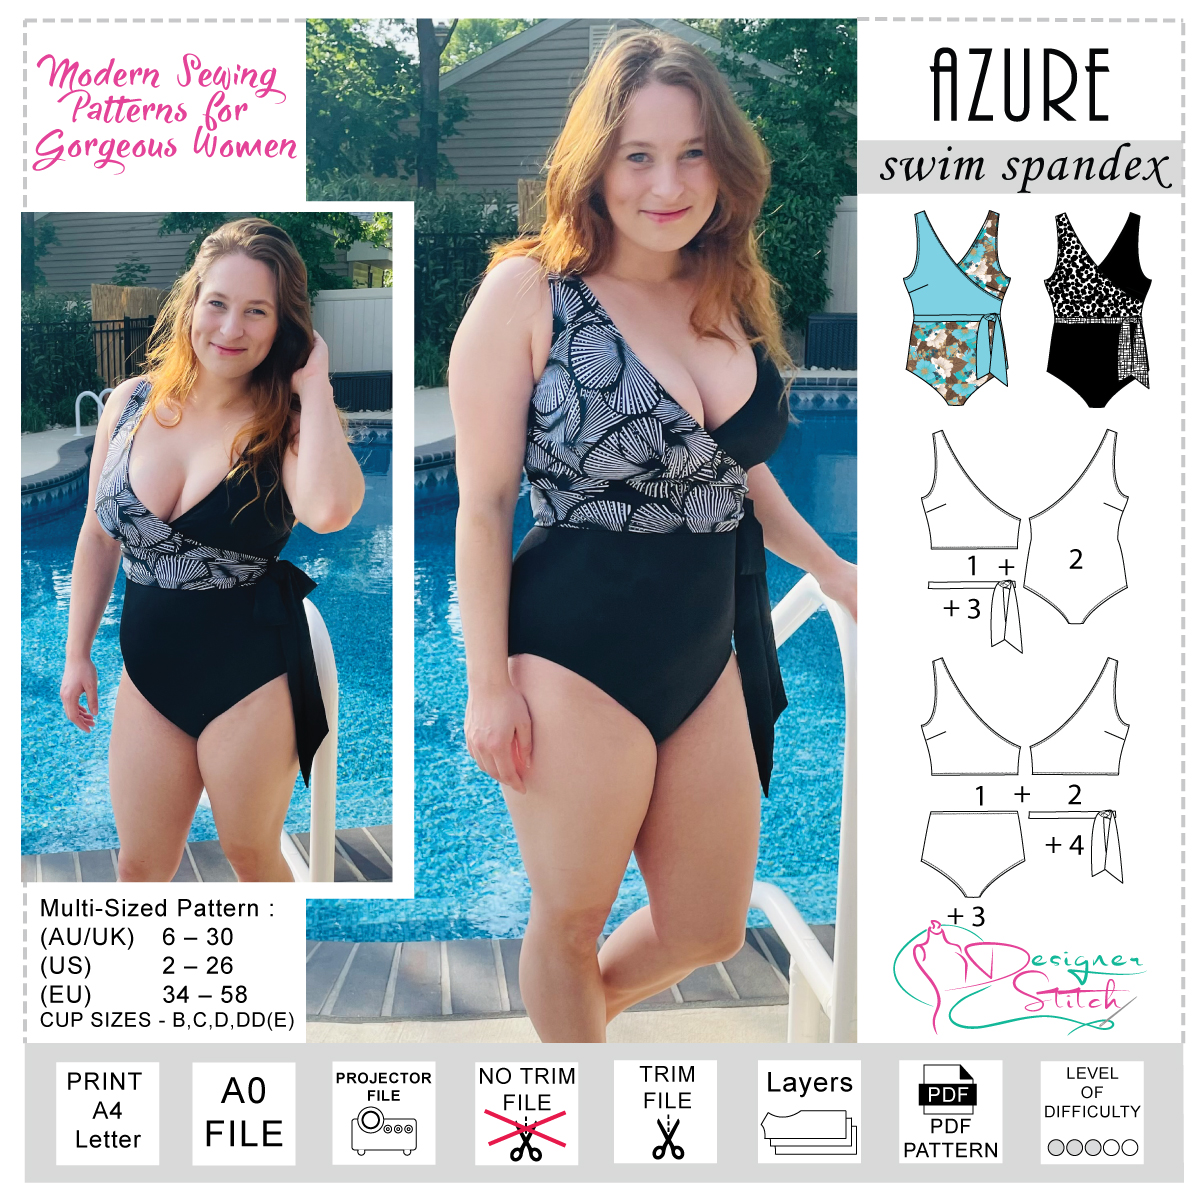 Rubber Kraan Formuleren Azure Swimsuit Sewing Pattern (PDF) - Designer Stitch